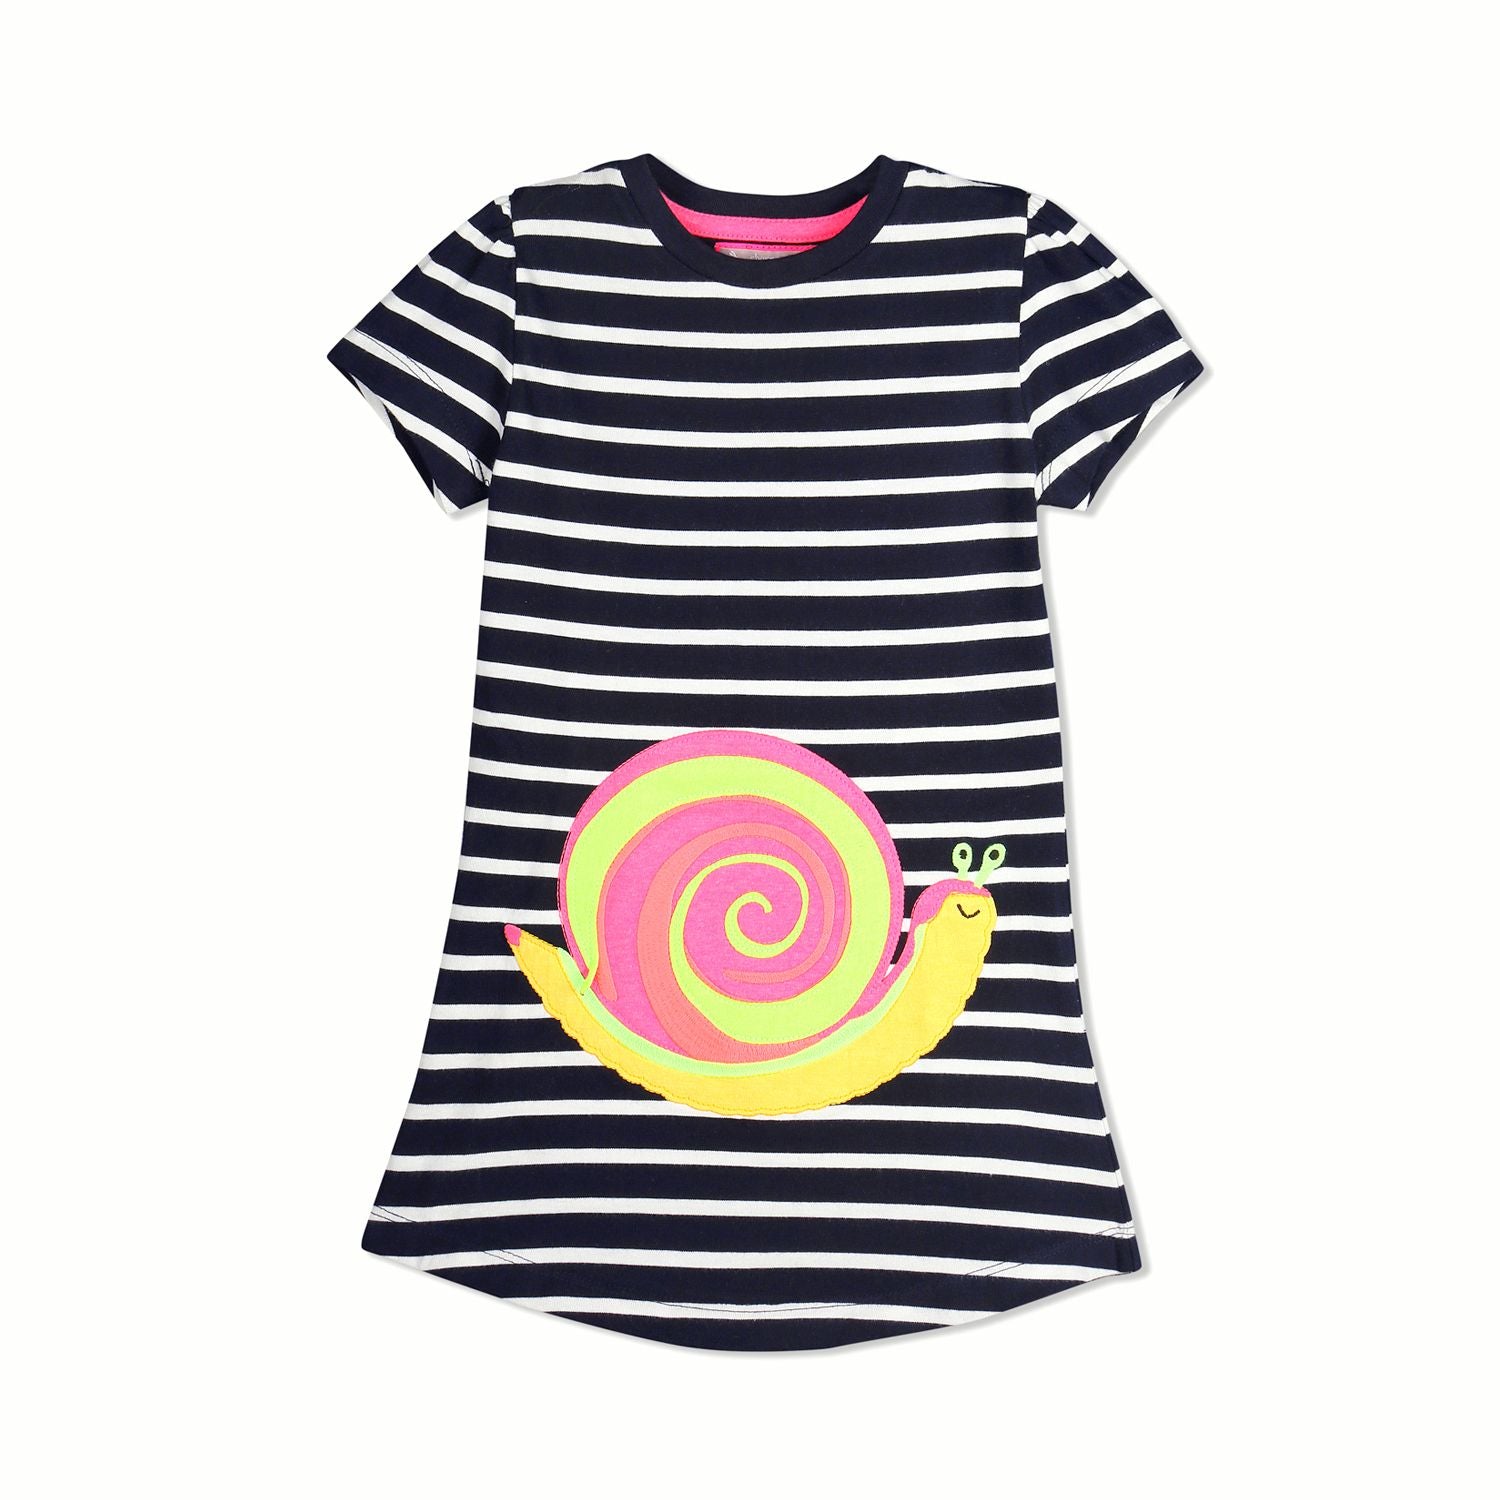 Snail Applique Dress for Girls